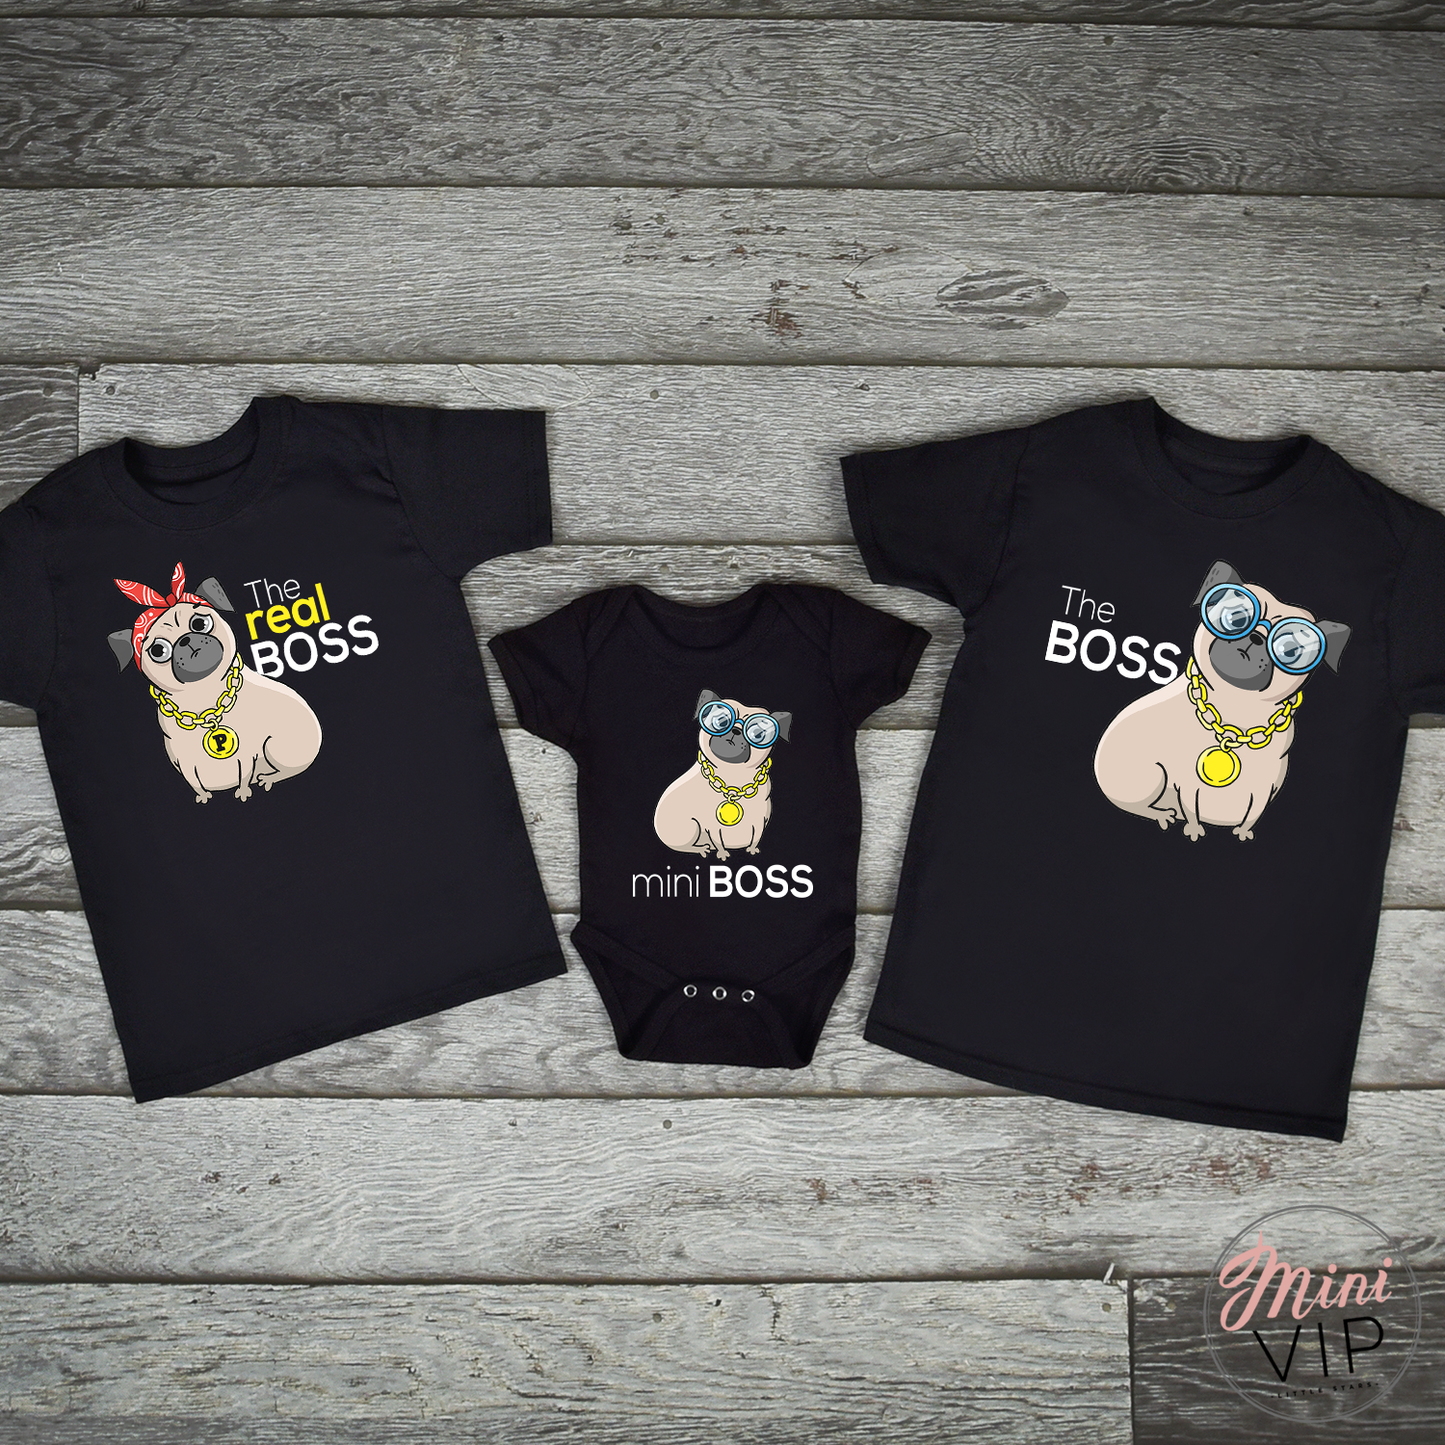 Mini Boss - Pug Baby/Kids Sizes